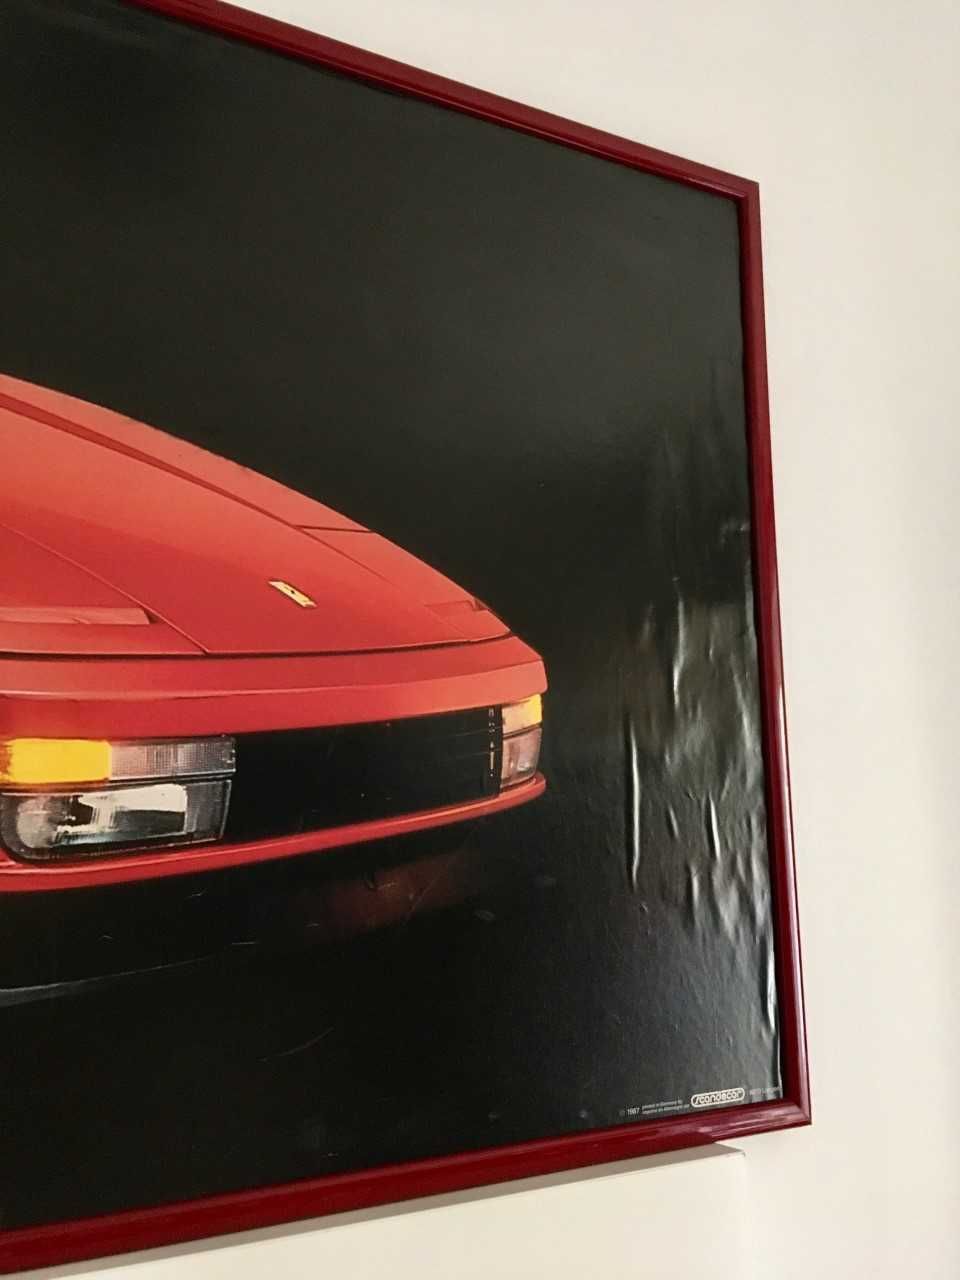 Ferrari Testarossa - poster quadro antigo 1,60 m x 55 cm